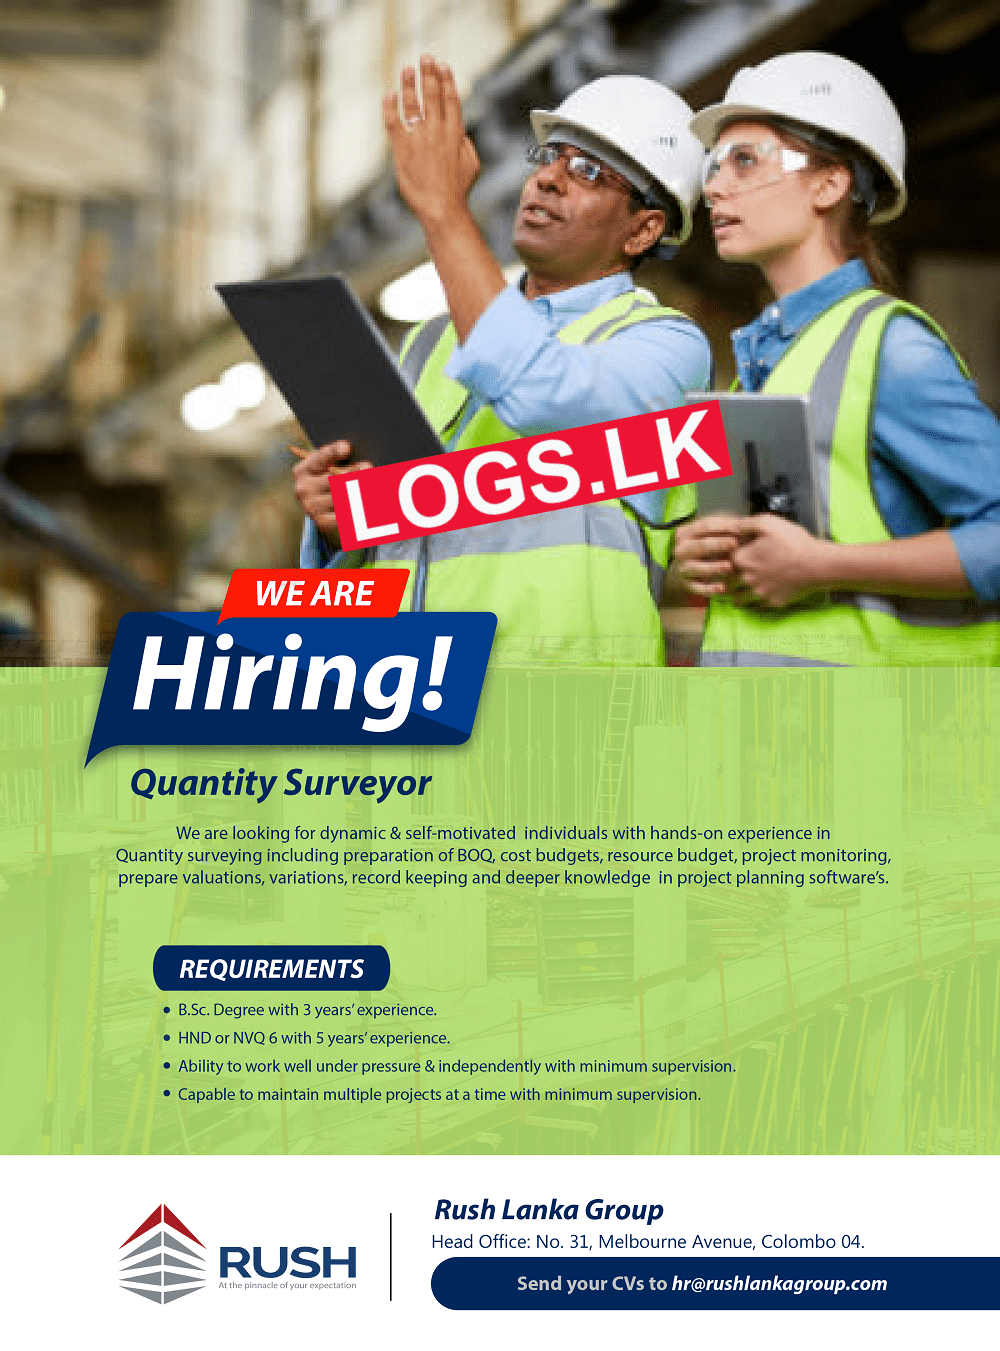 Quantity Surveyor Job Vacancy at Rush Lanka Group Job Vacancies Application